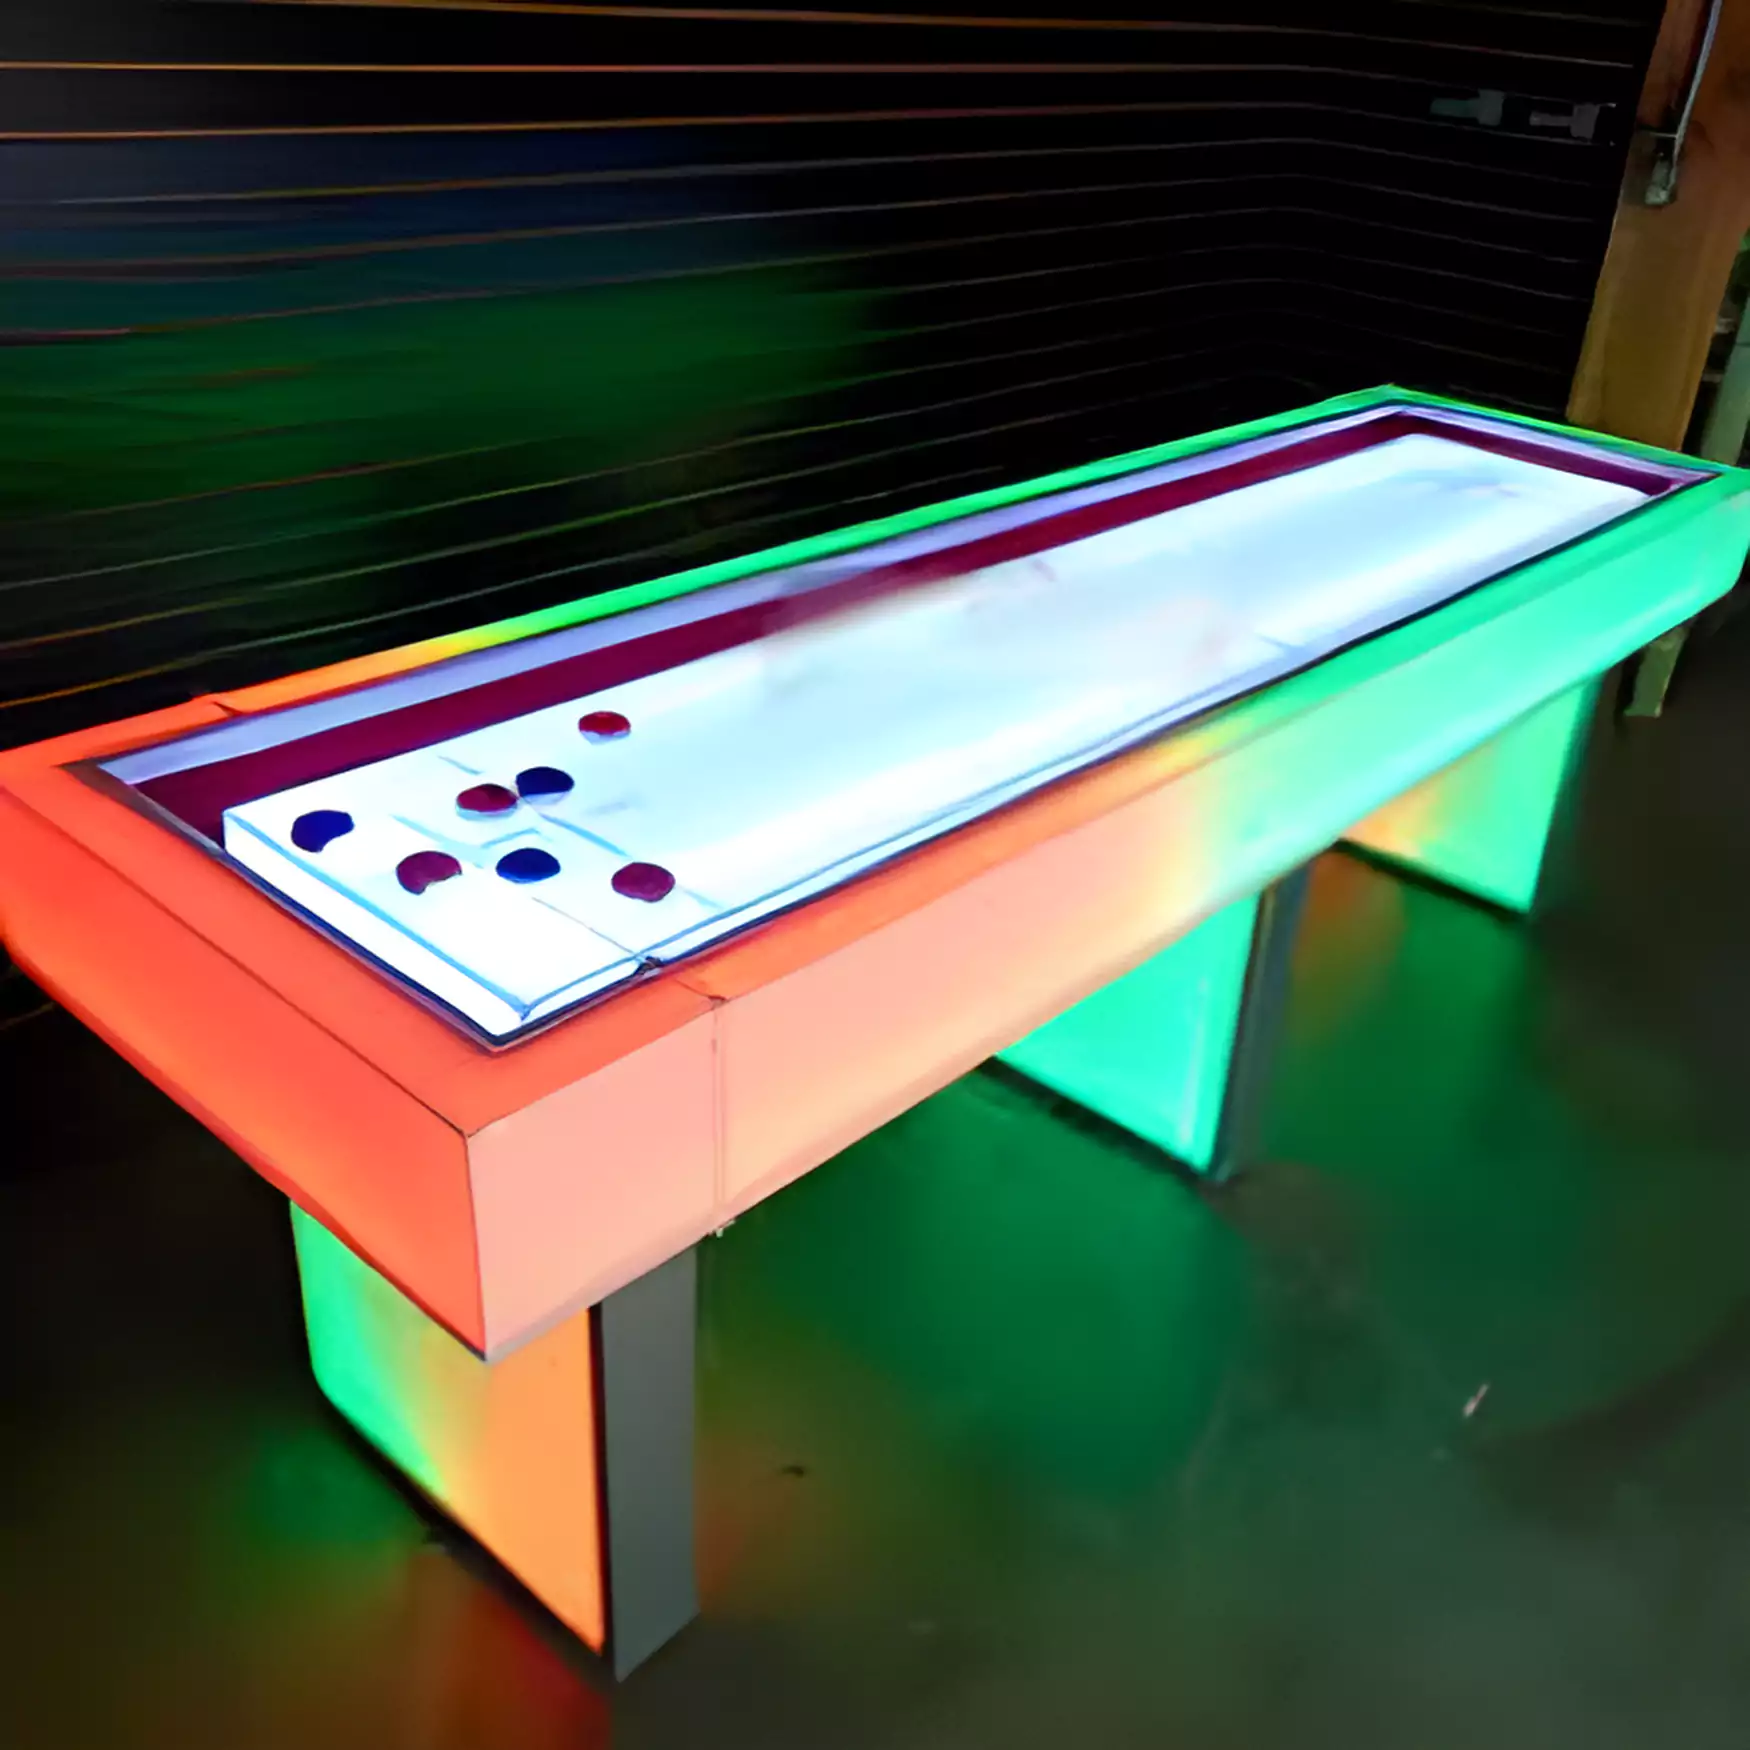 LED Shuffleboard Arcade Game